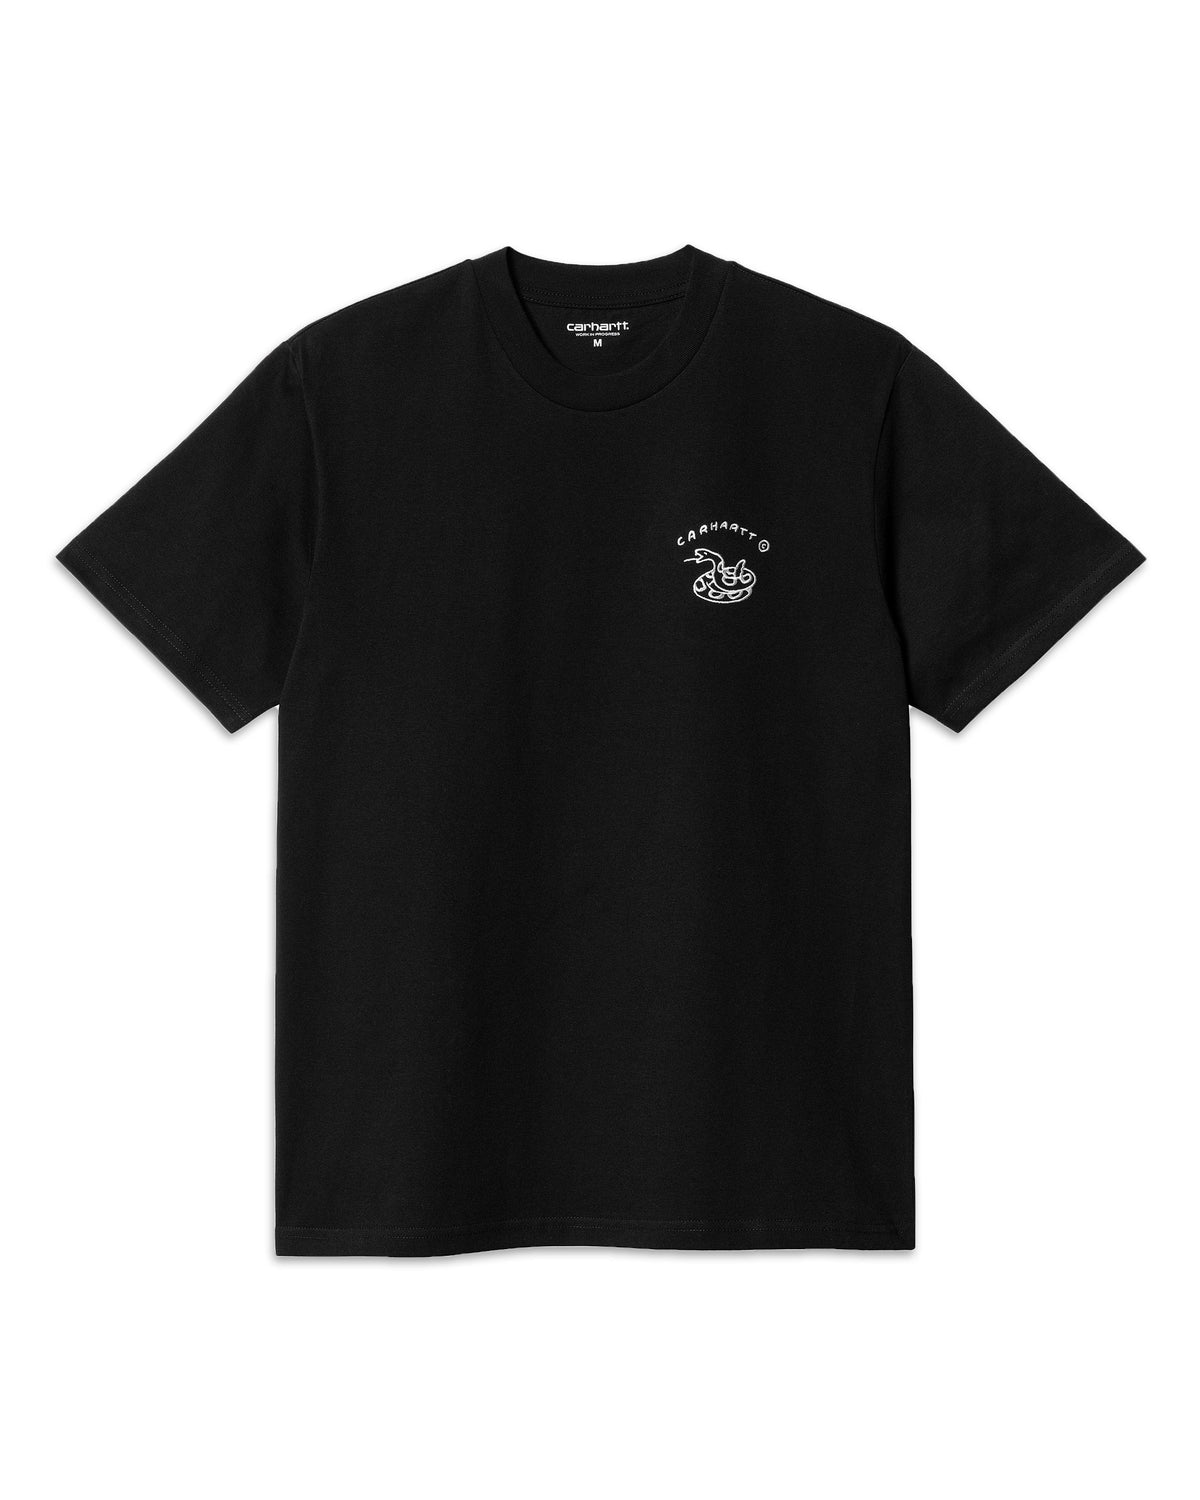 Carhartt Wip New Frontier T-shirt Black